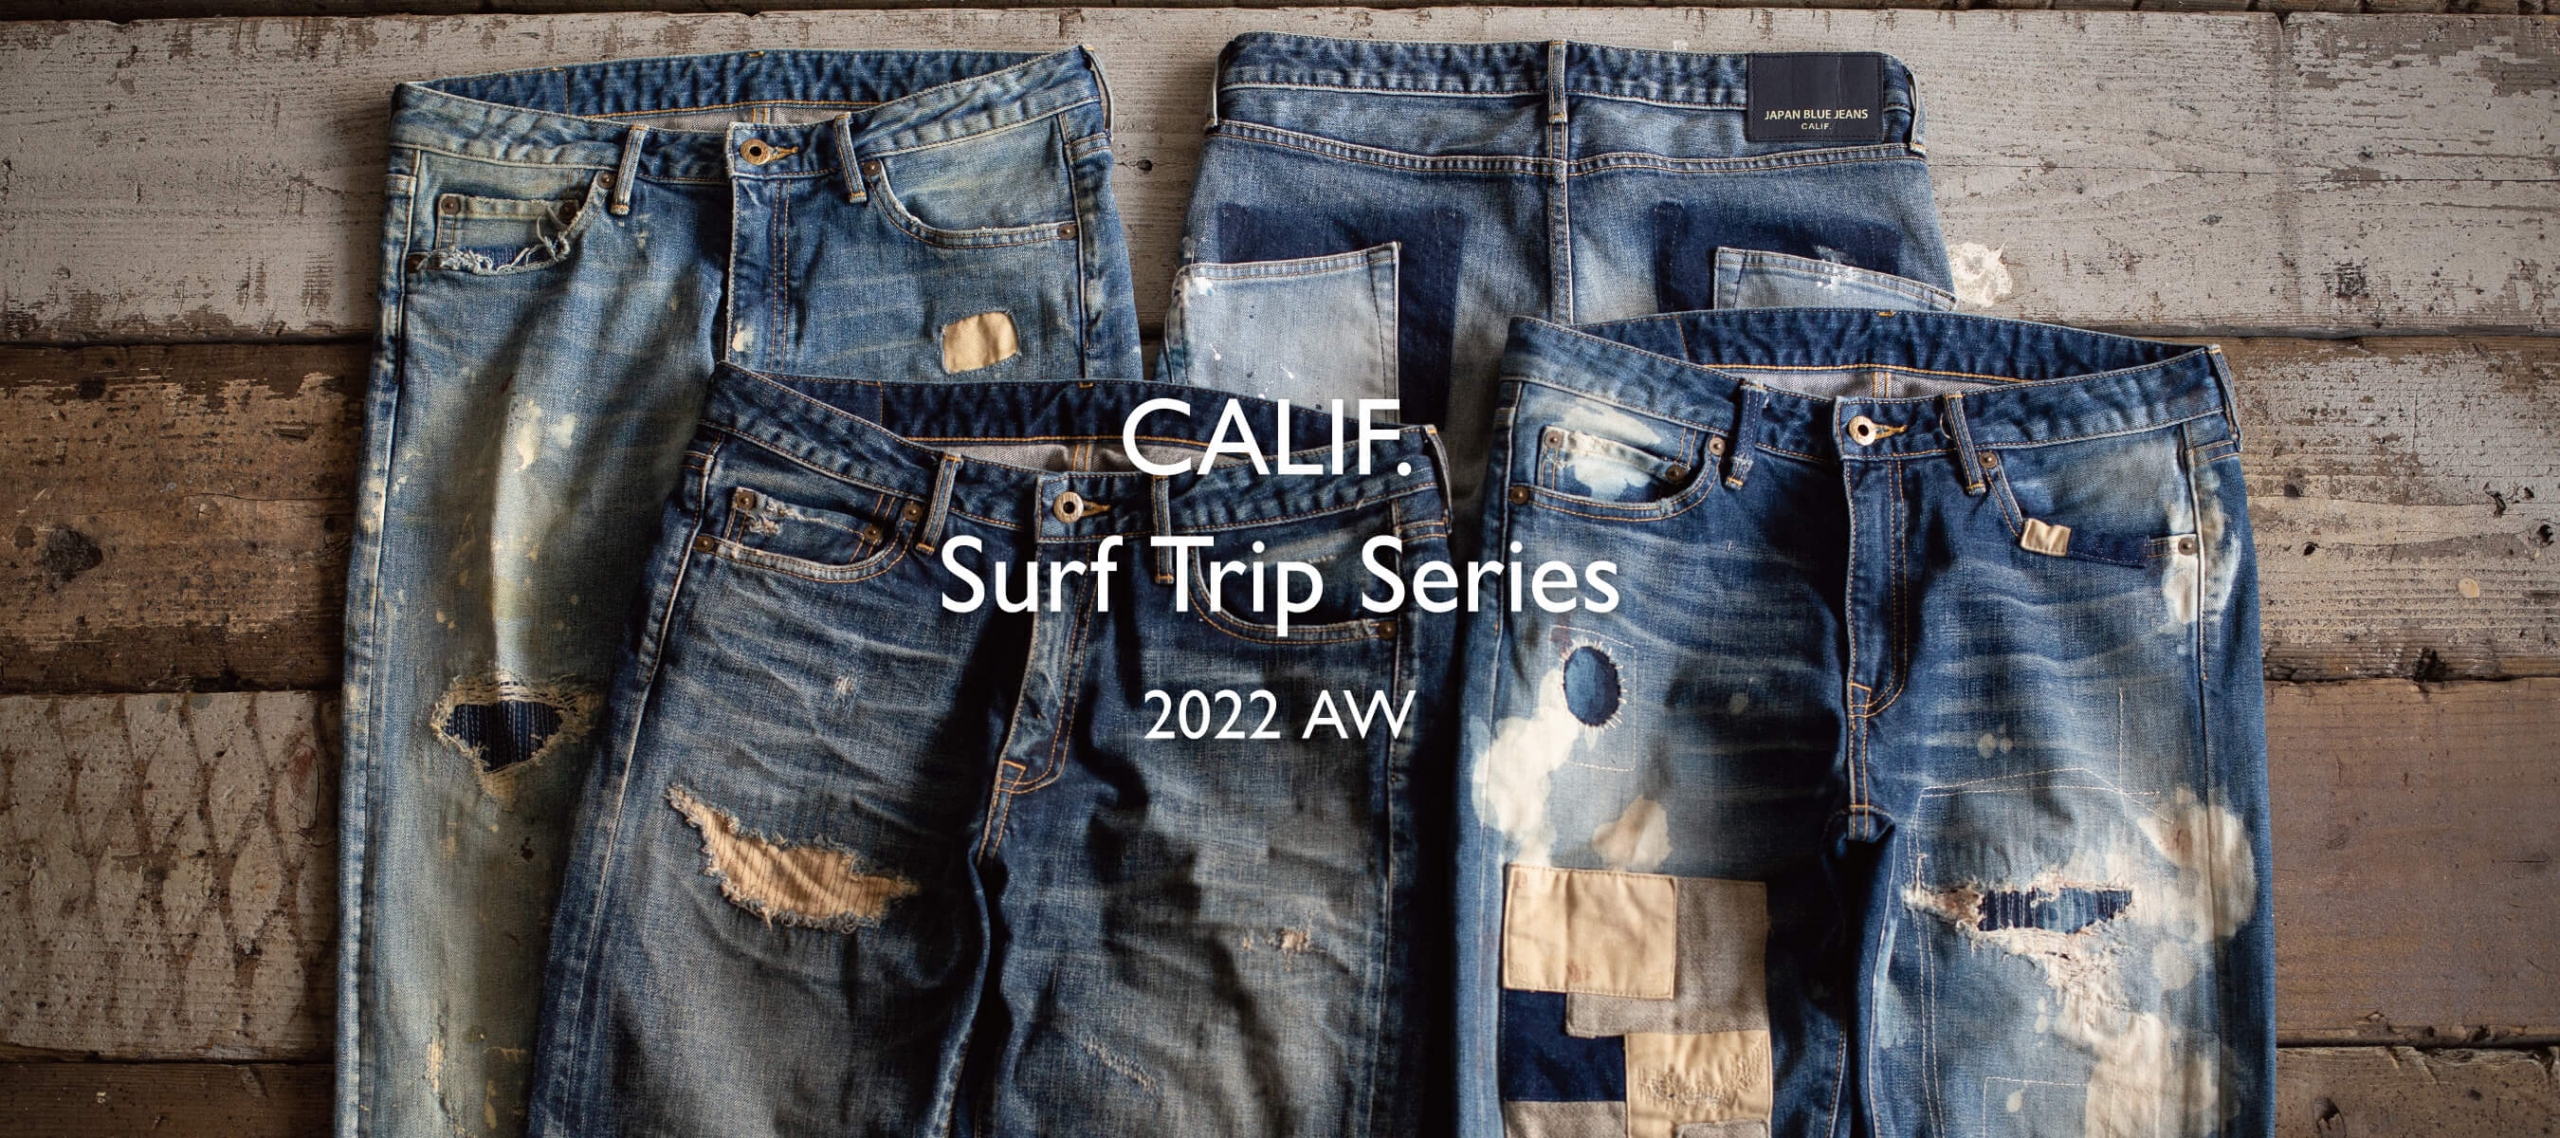 CALIF. Surf Trip Series 2022 AW